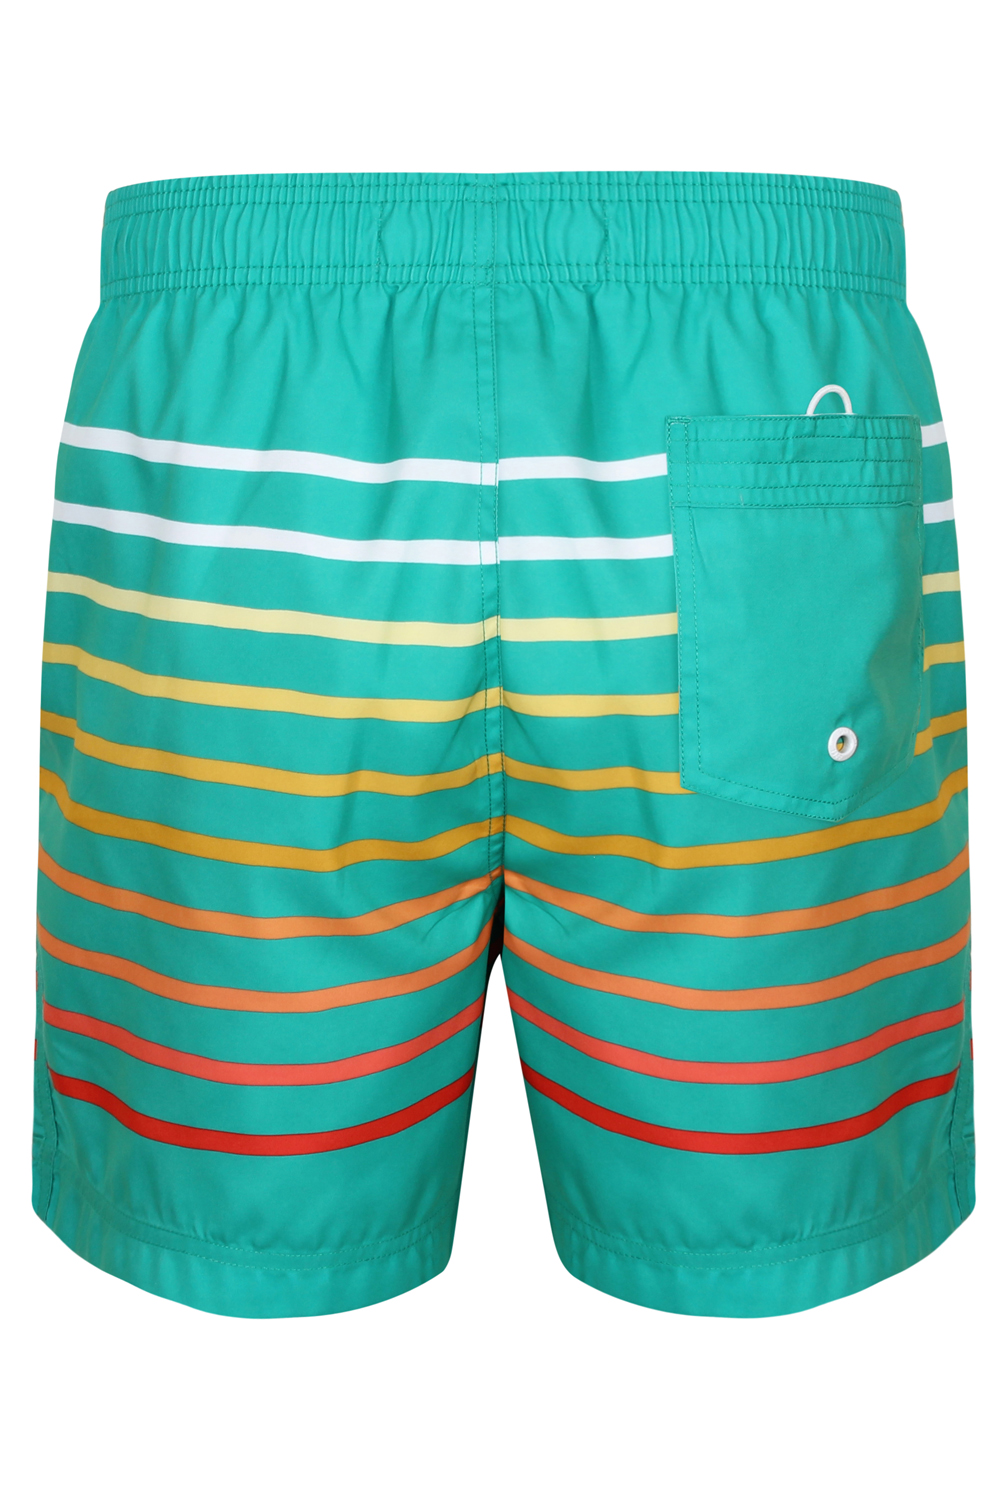 South Shore Mens Freemason Swim Shorts Designer Faded Striped Print ...